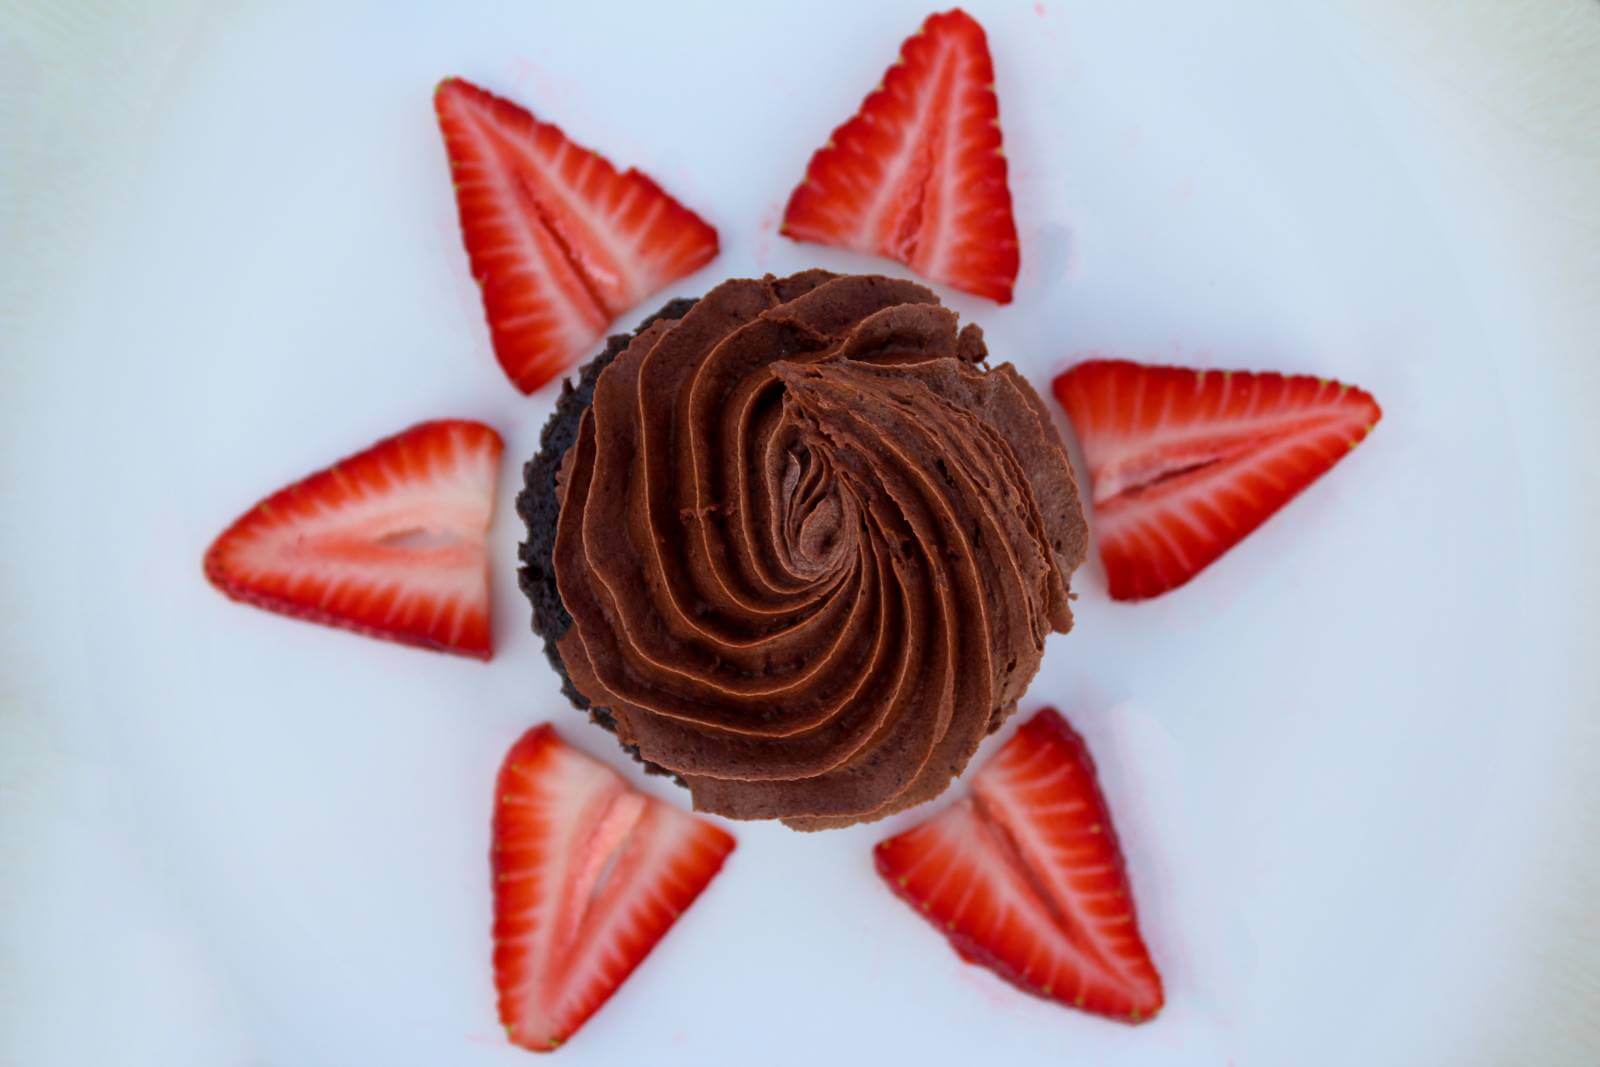 Cupcake with strawberries around it